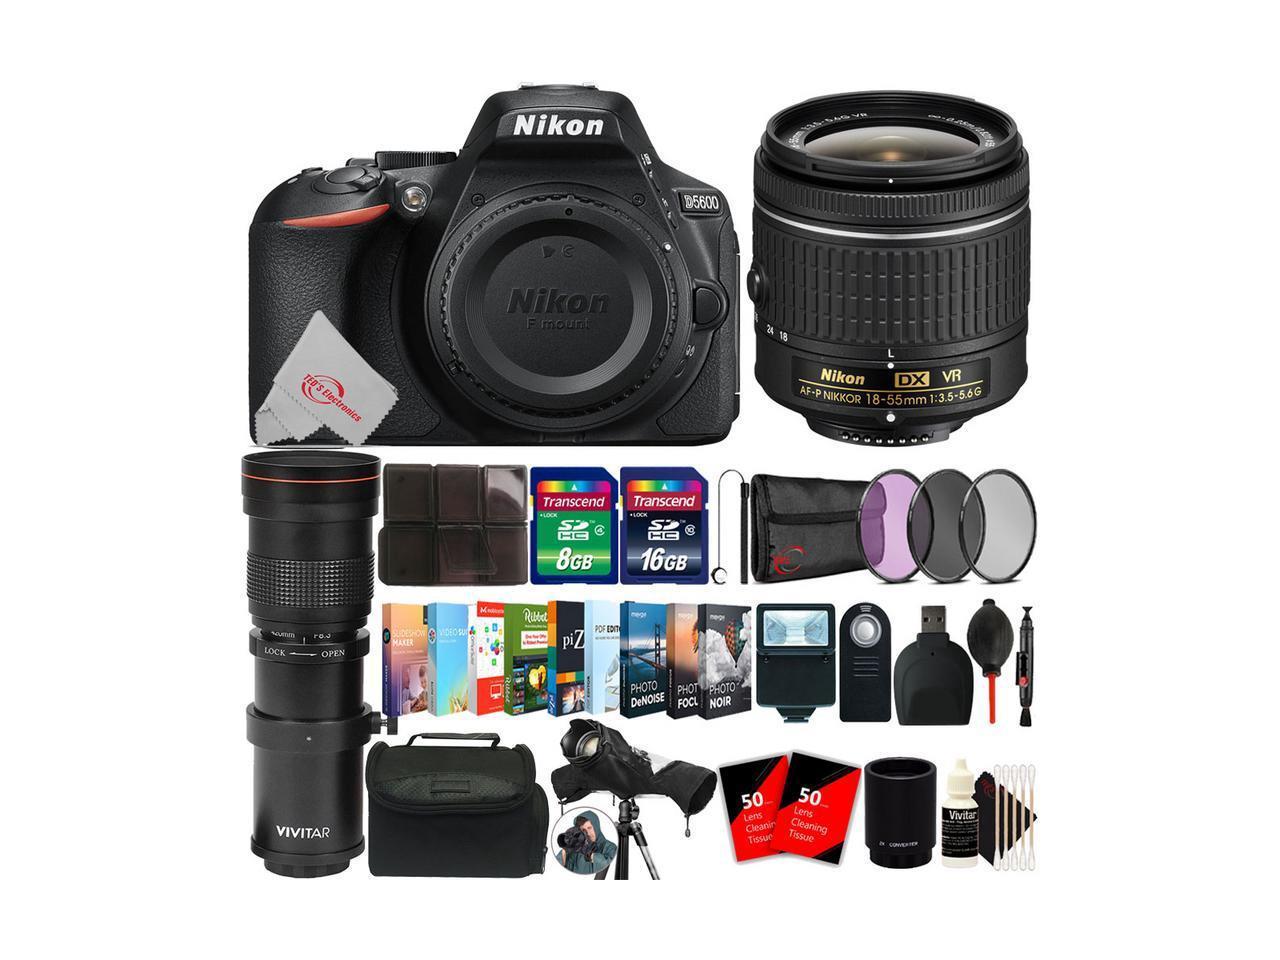 Nikon D5600 24.2MP Digital SLR Camera + 18-55mm & 420-800mm Lens Accessory Kit